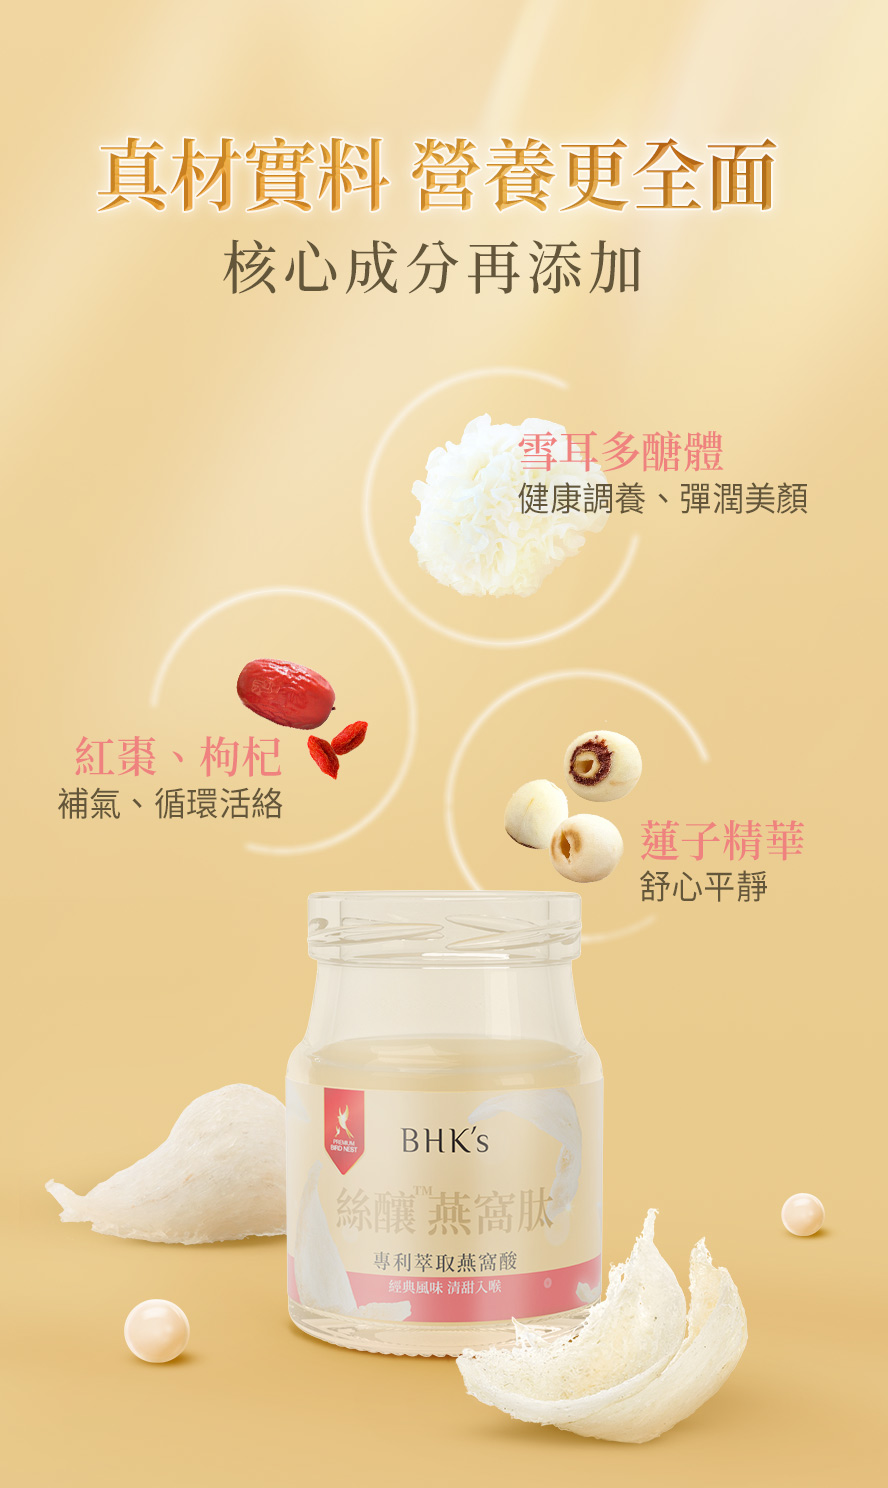 BHKs燕窩的功效：養顏美容、養生補氣。